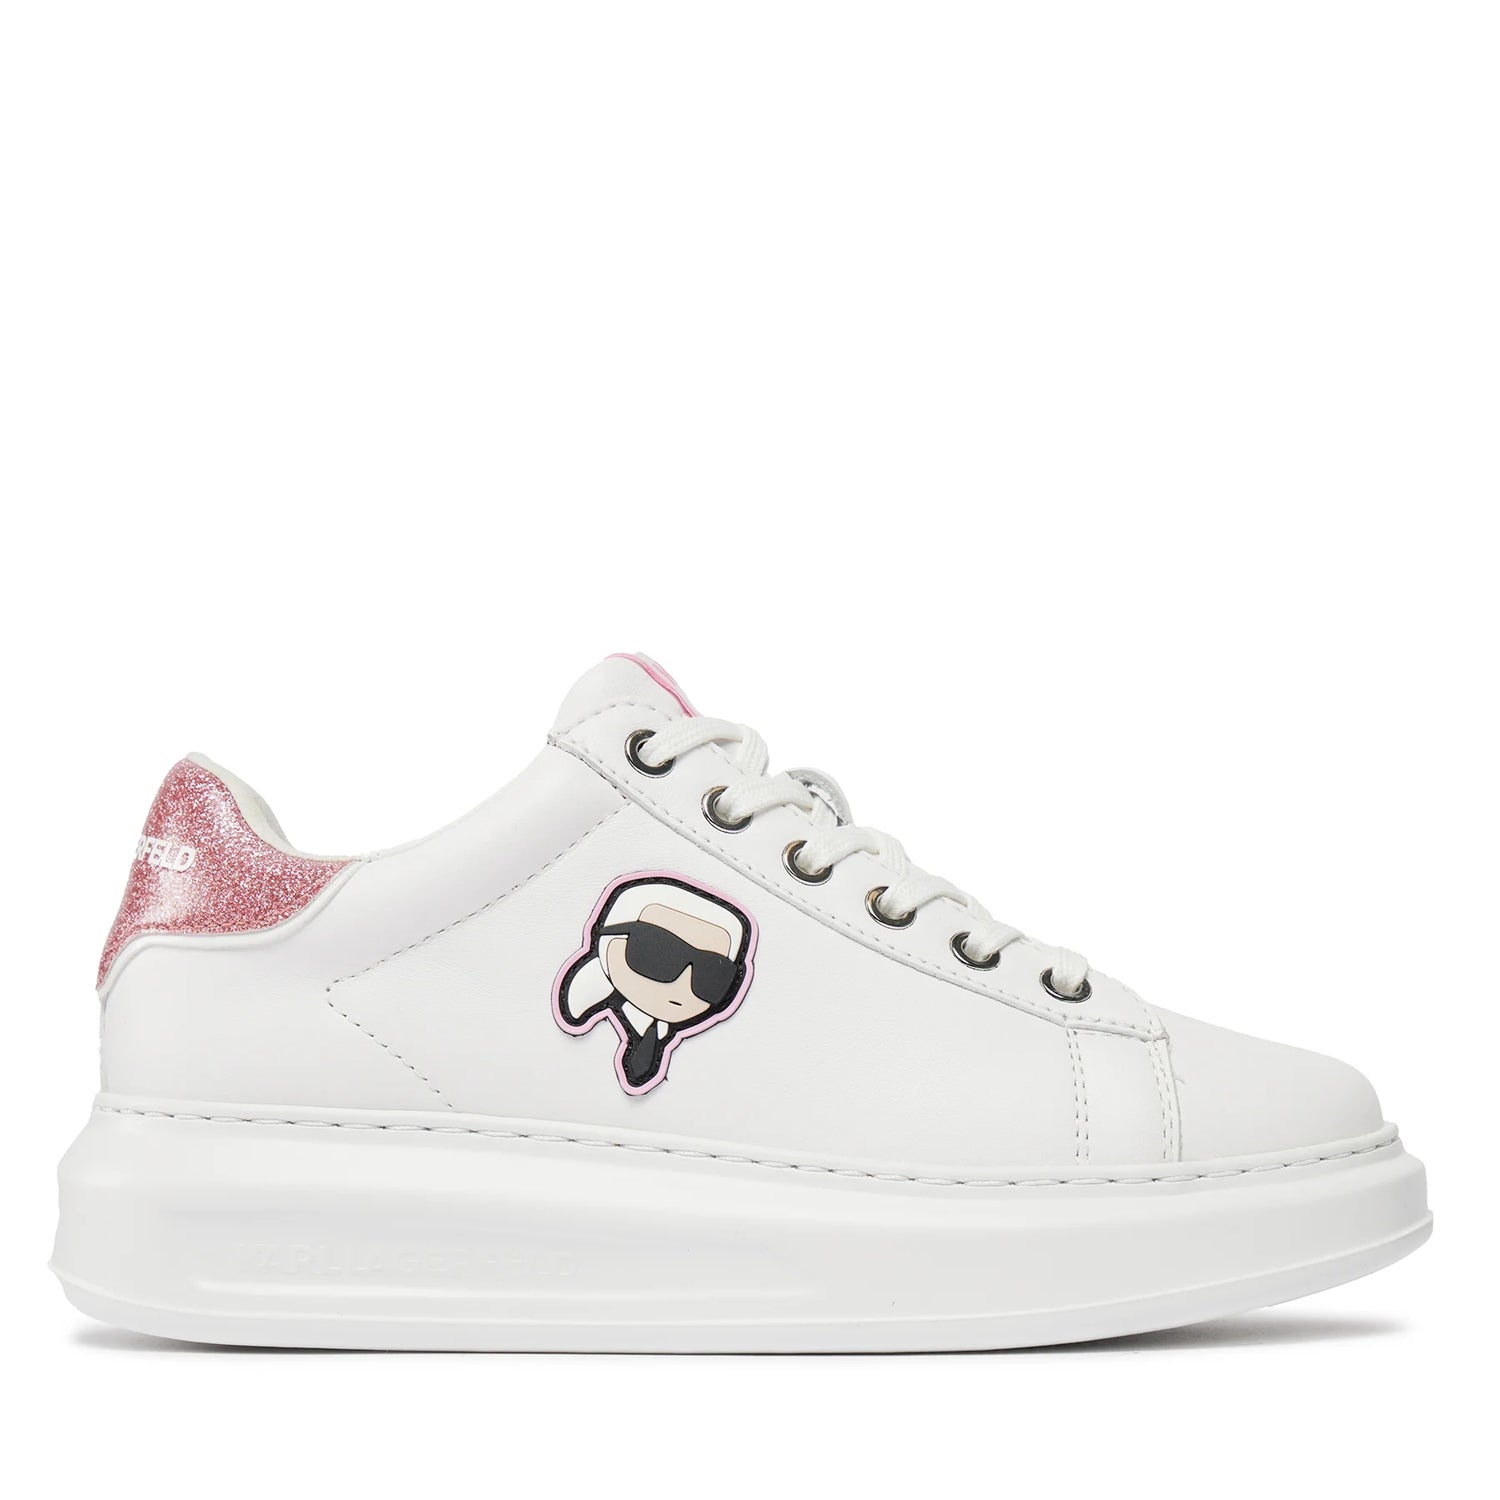 Karl Lagerfeld Sapatilhas Sneakers Shoes Kl62530n Whi Pink Branco Rosa_shot1